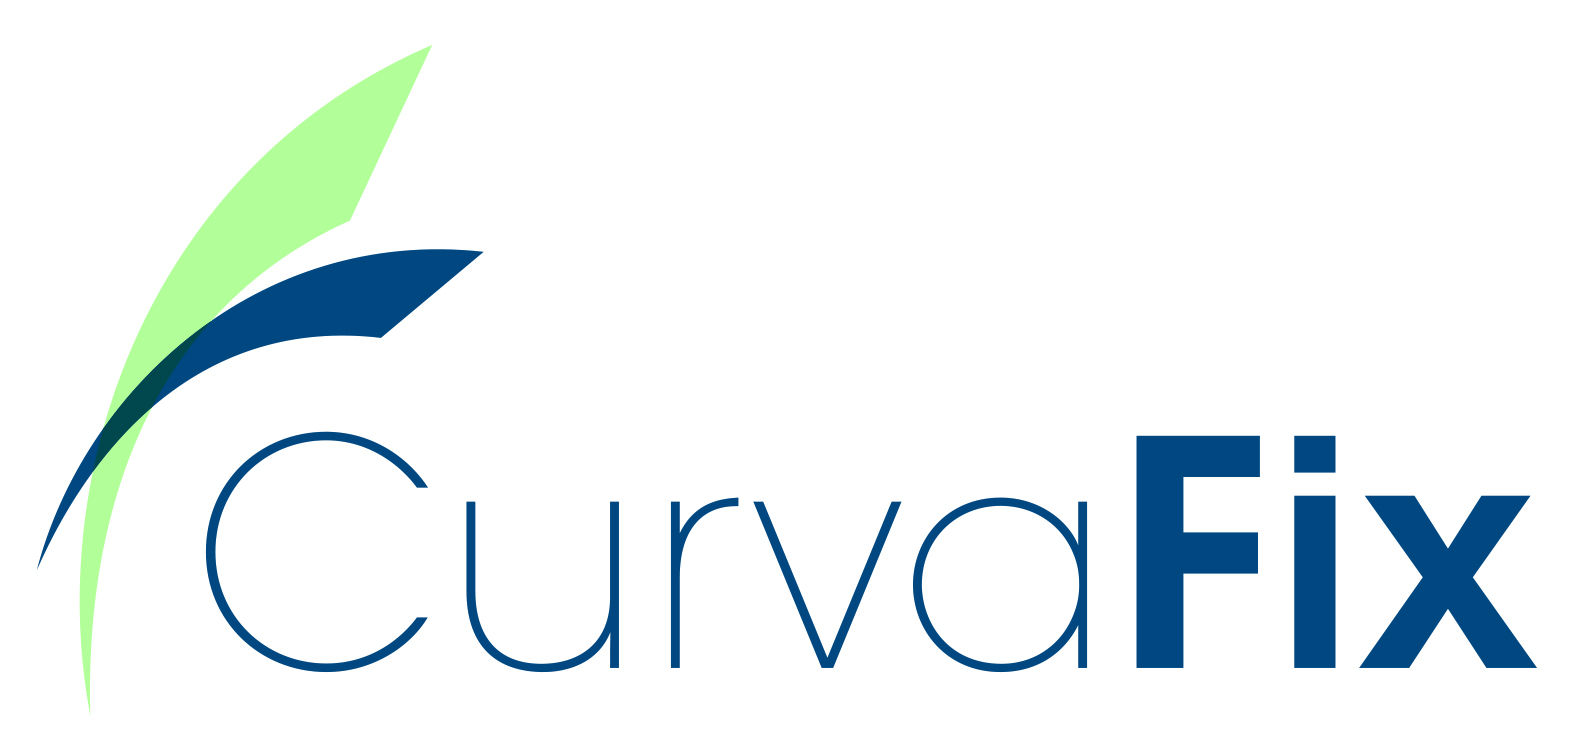 CurvaFix_Logo_rbg.jpg